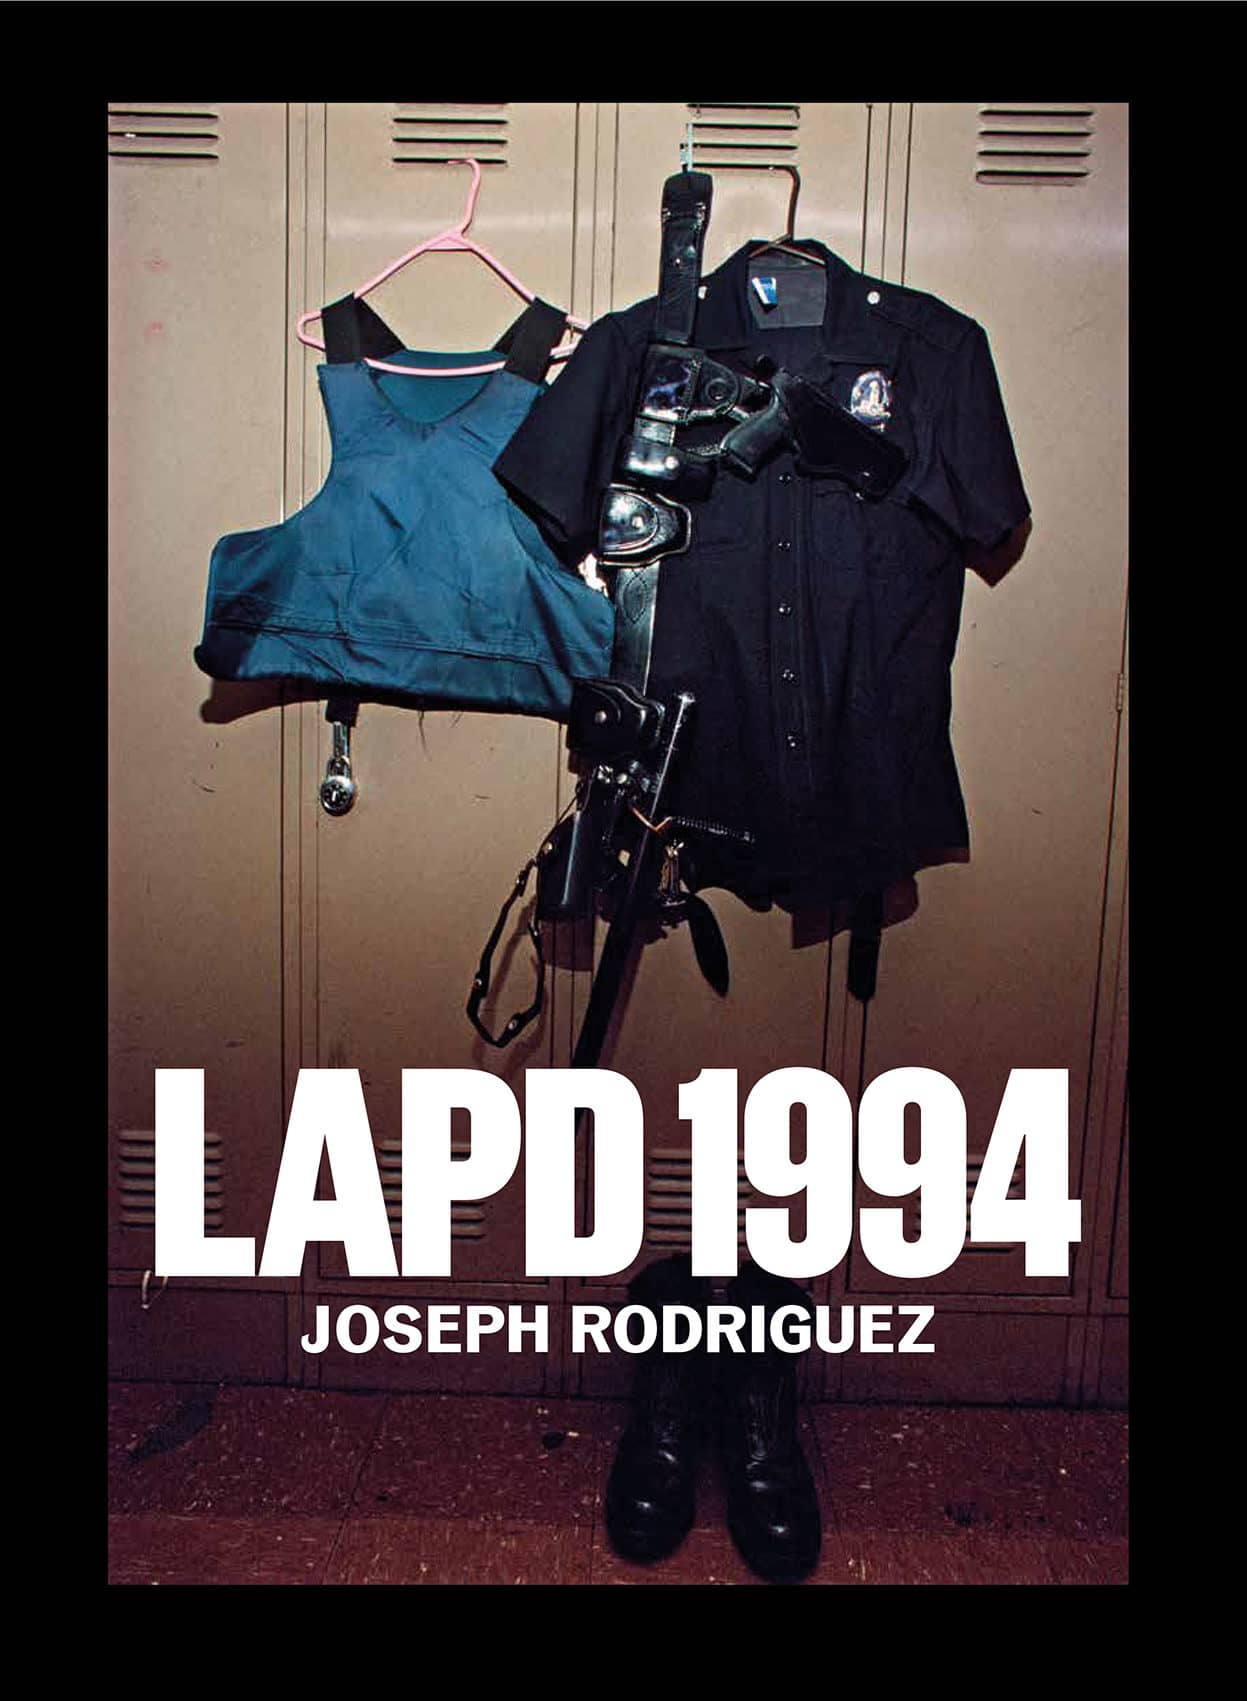 LAPD 1994 Joseph Rodriguez